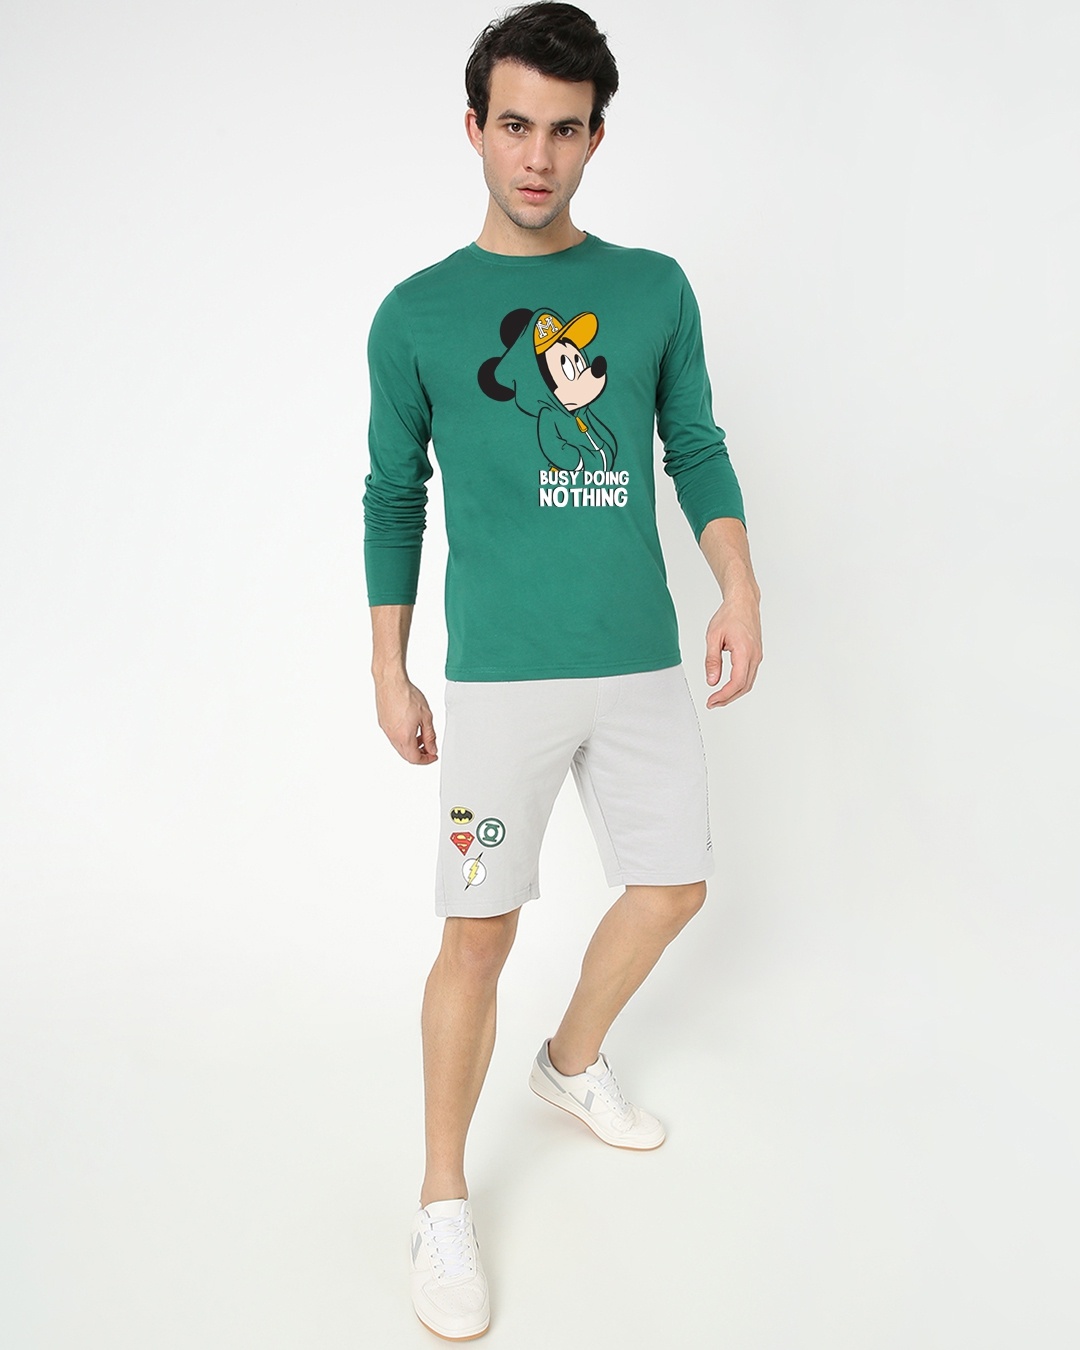 Shop Men's Busy Doin Nothing (DL) Full Sleeve T-shirt-Design